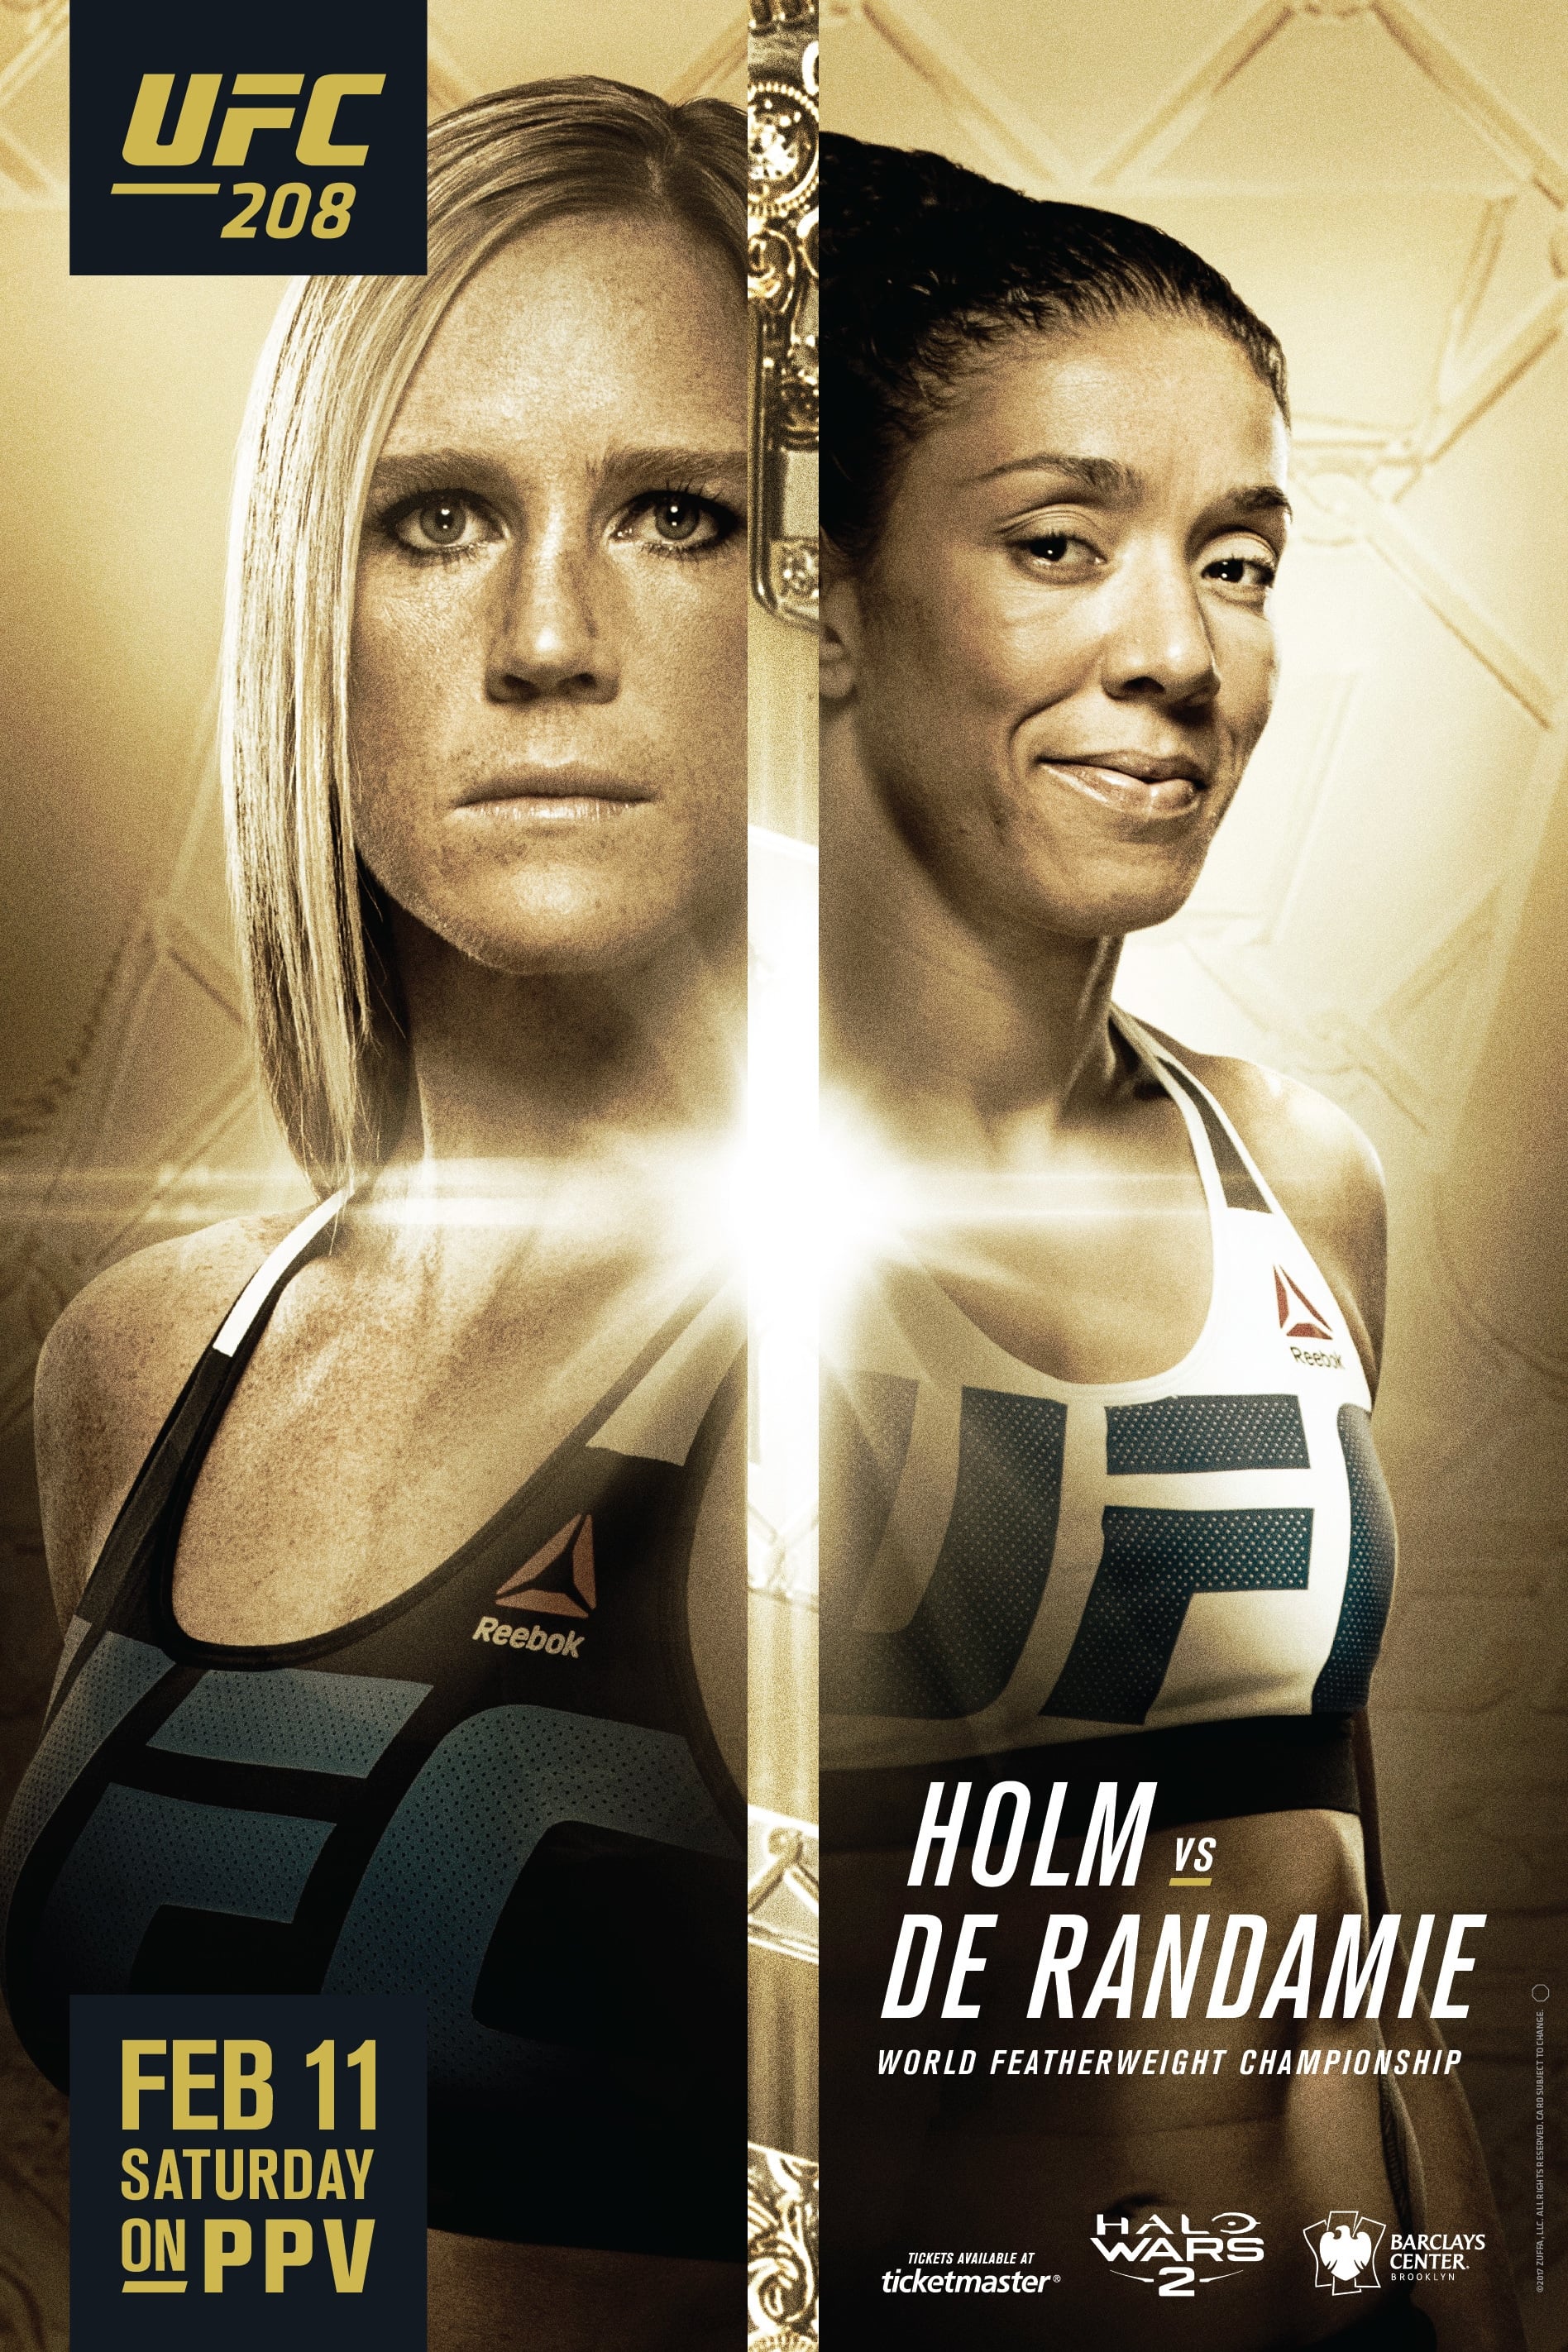 UFC 208: Holm vs. de Randamie